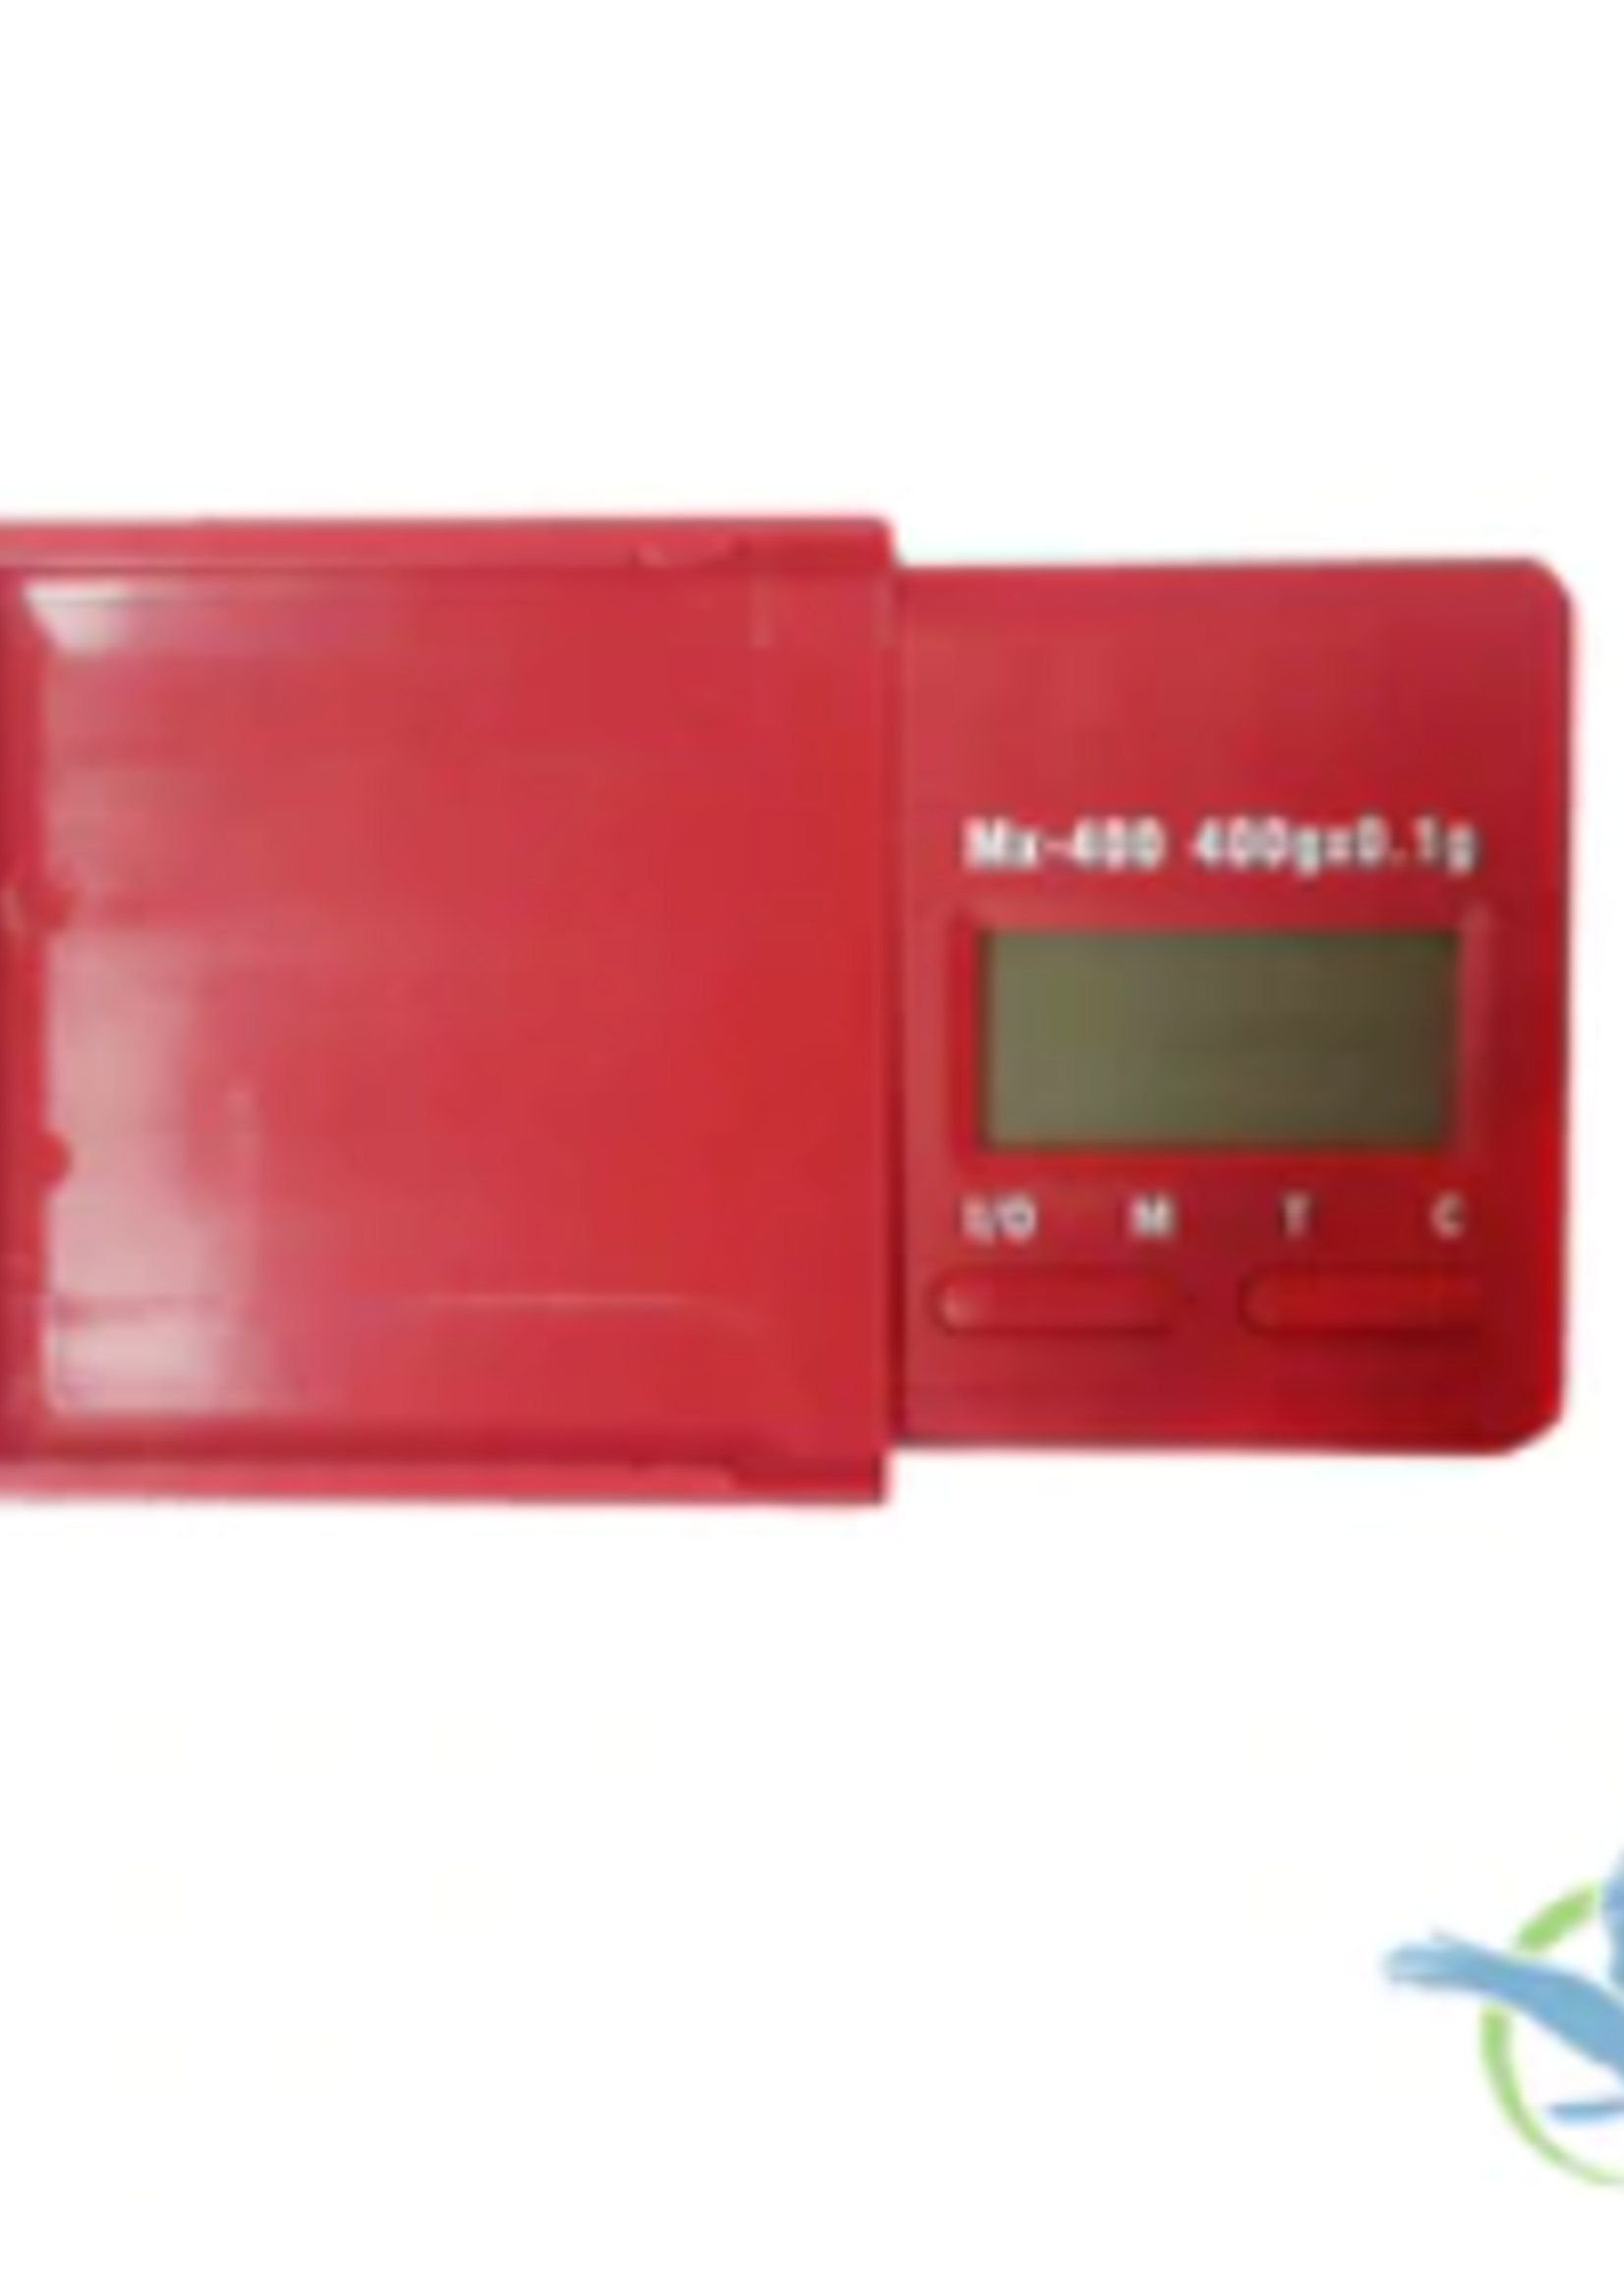 SB Pocket Scale Mx-400 400g x 0.1g